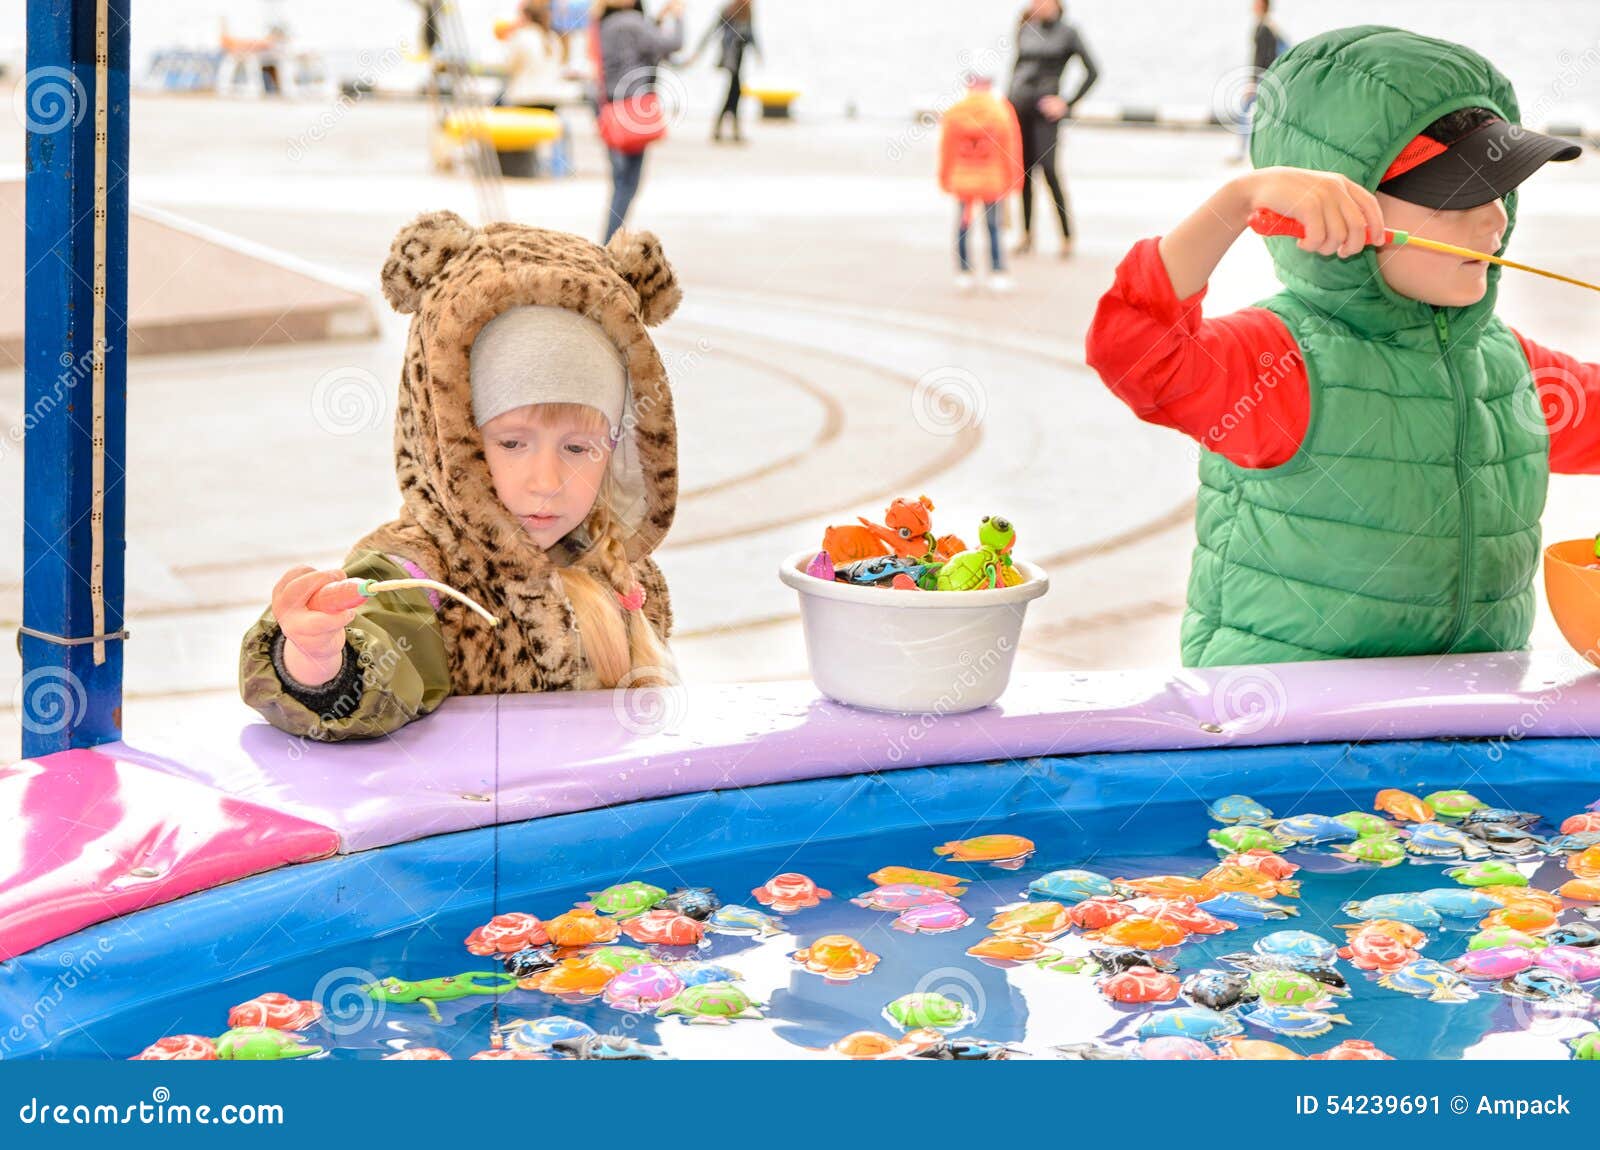 https://thumbs.dreamstime.com/z/children-playing-fishing-pond-game-fun-fair-wearing-warm-clothing-amusement-outdoor-carnival-54239691.jpg